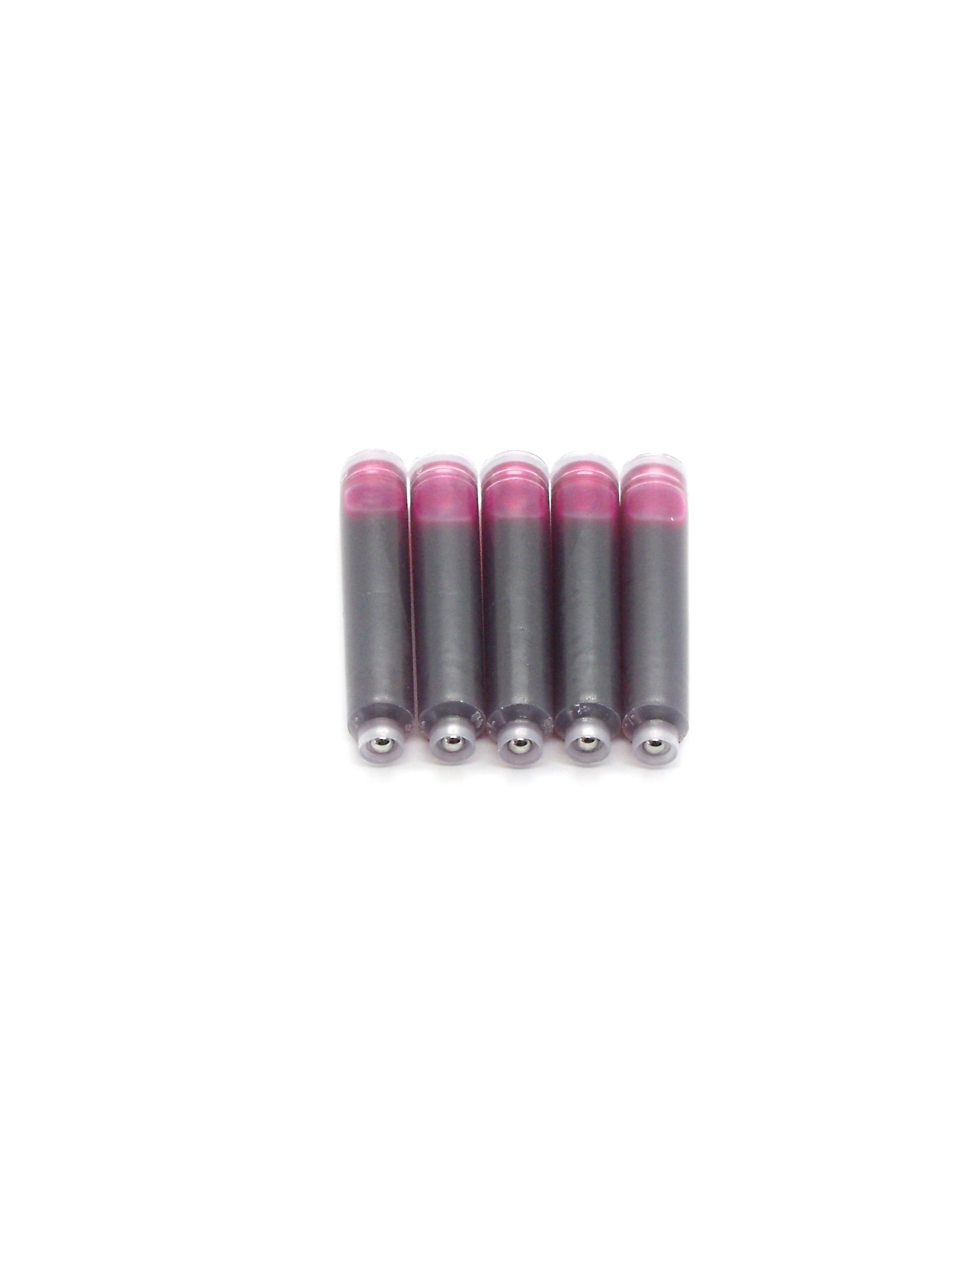 Top Ink Cartridges For Nemosine Fountain Pens (Pink)